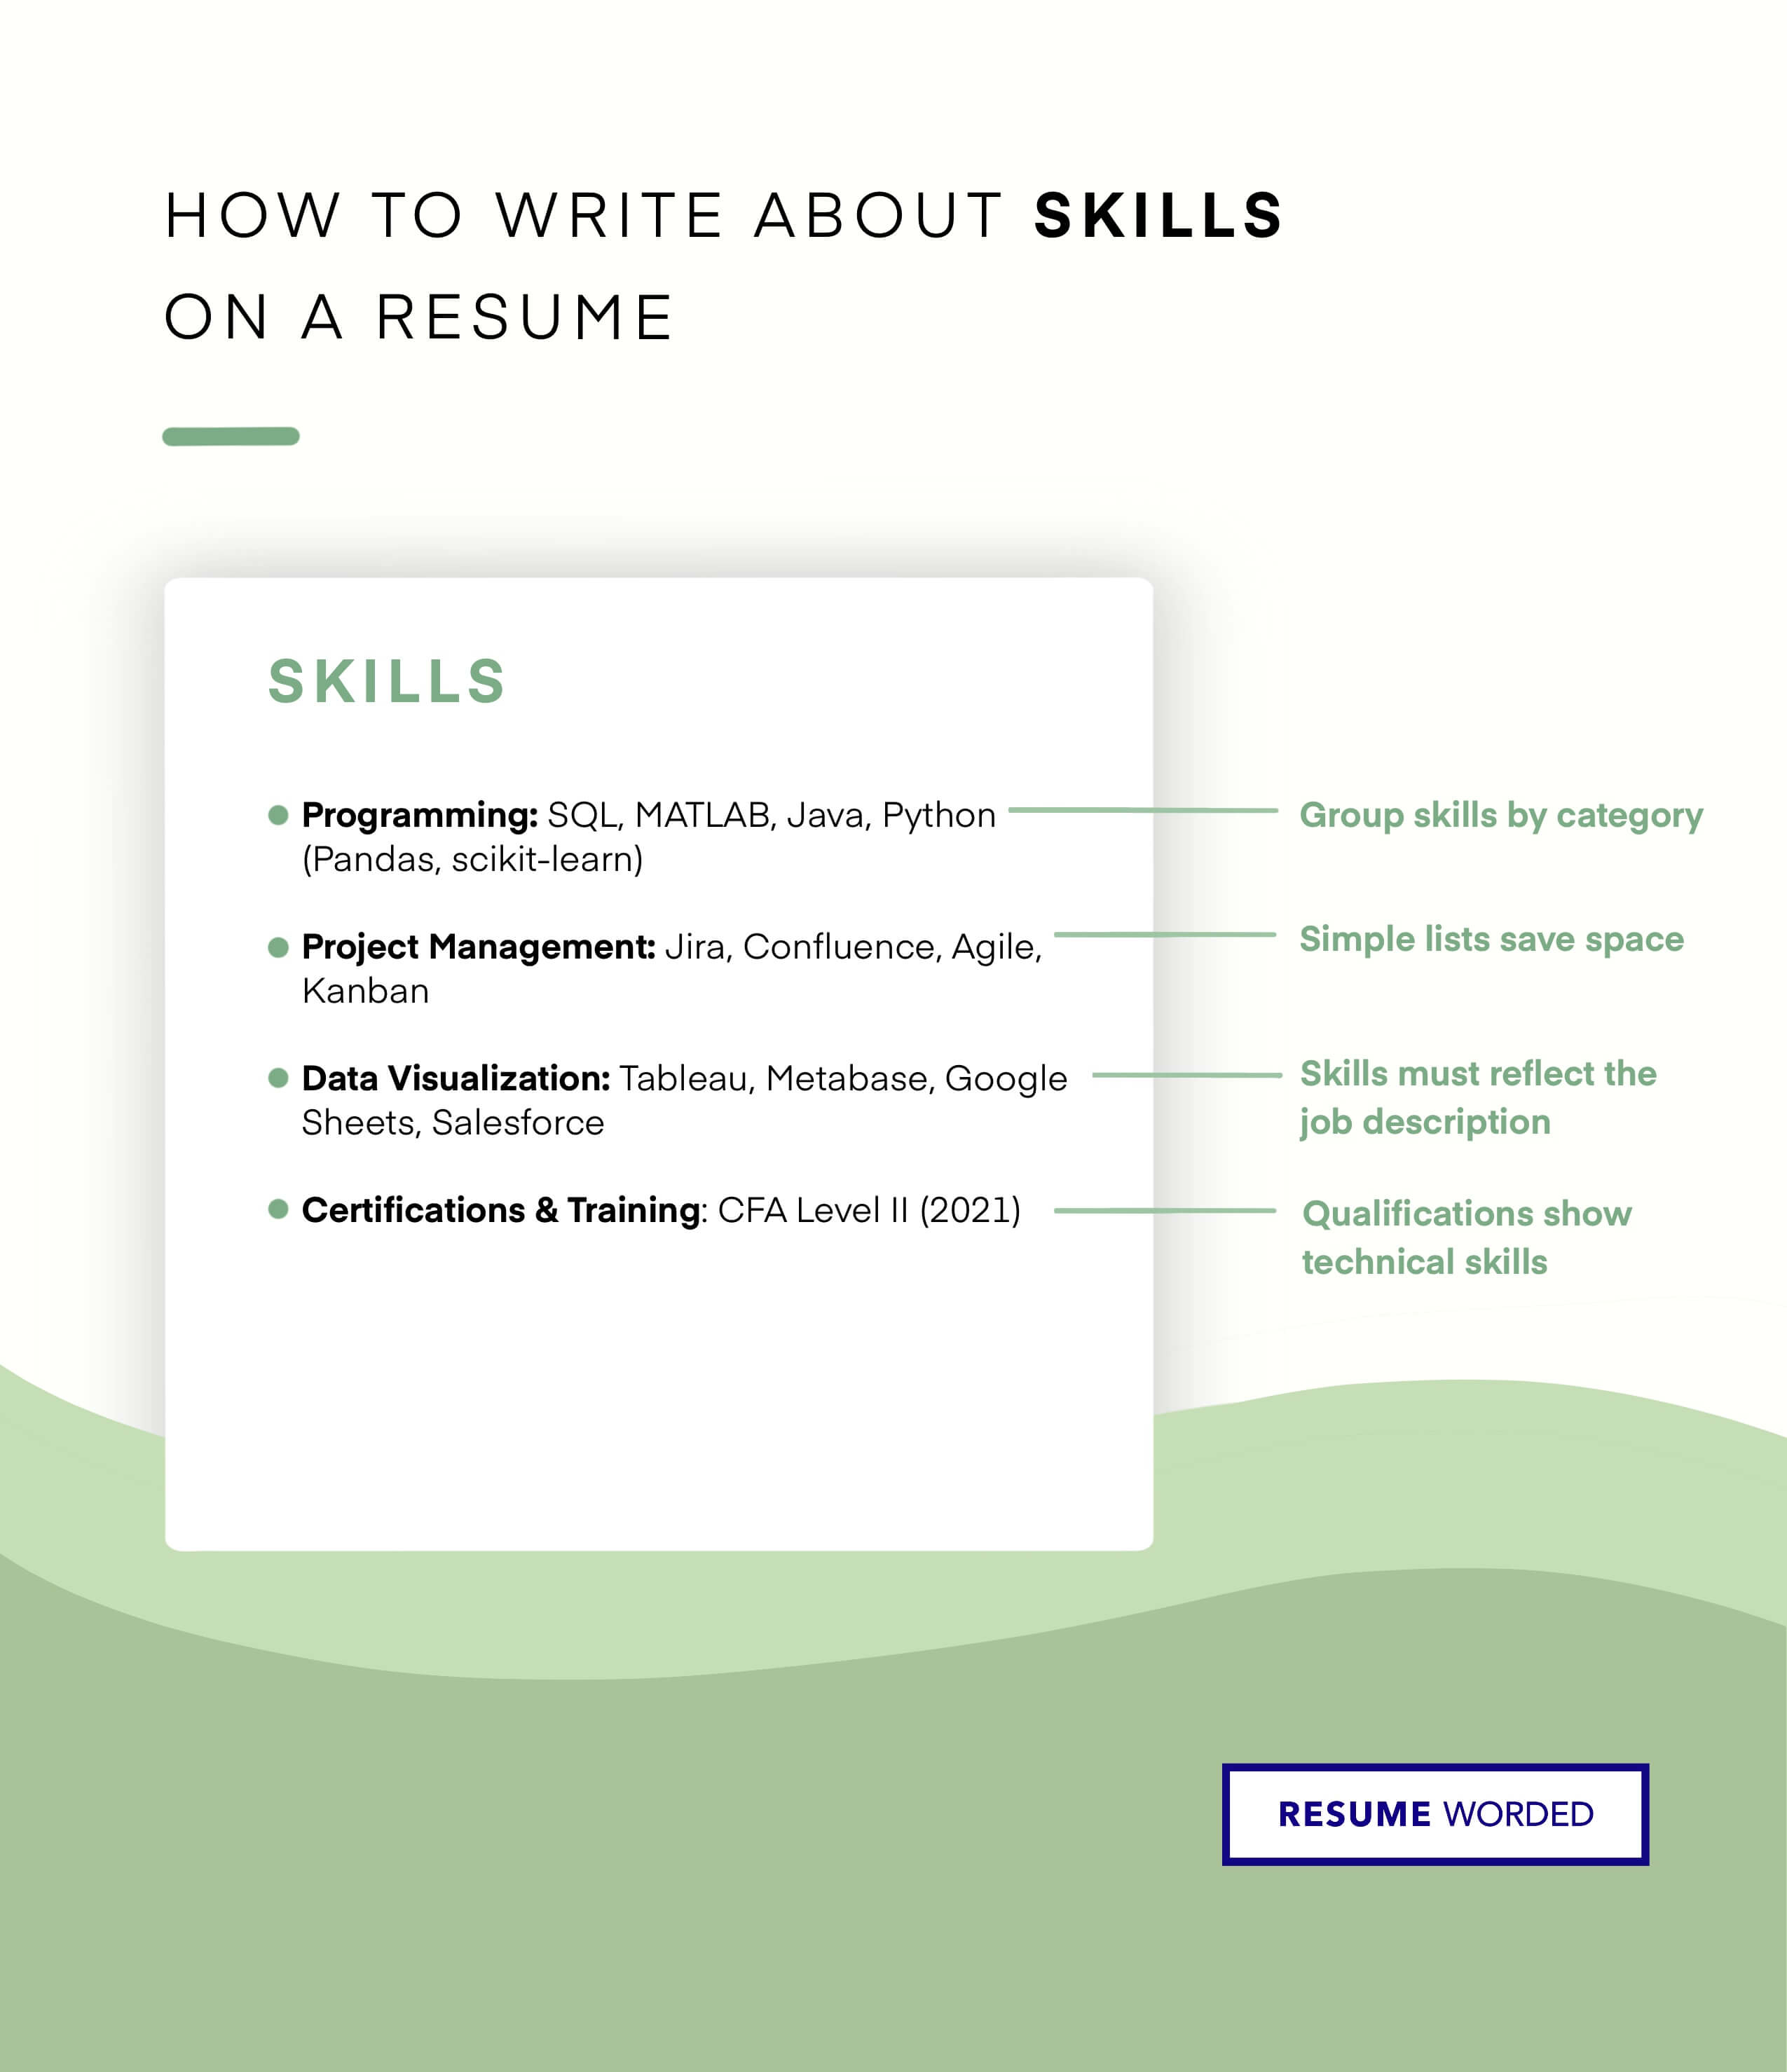 Link skills in skills list to actual Java achievements in resume bullet points. - J2EE Developer Resume